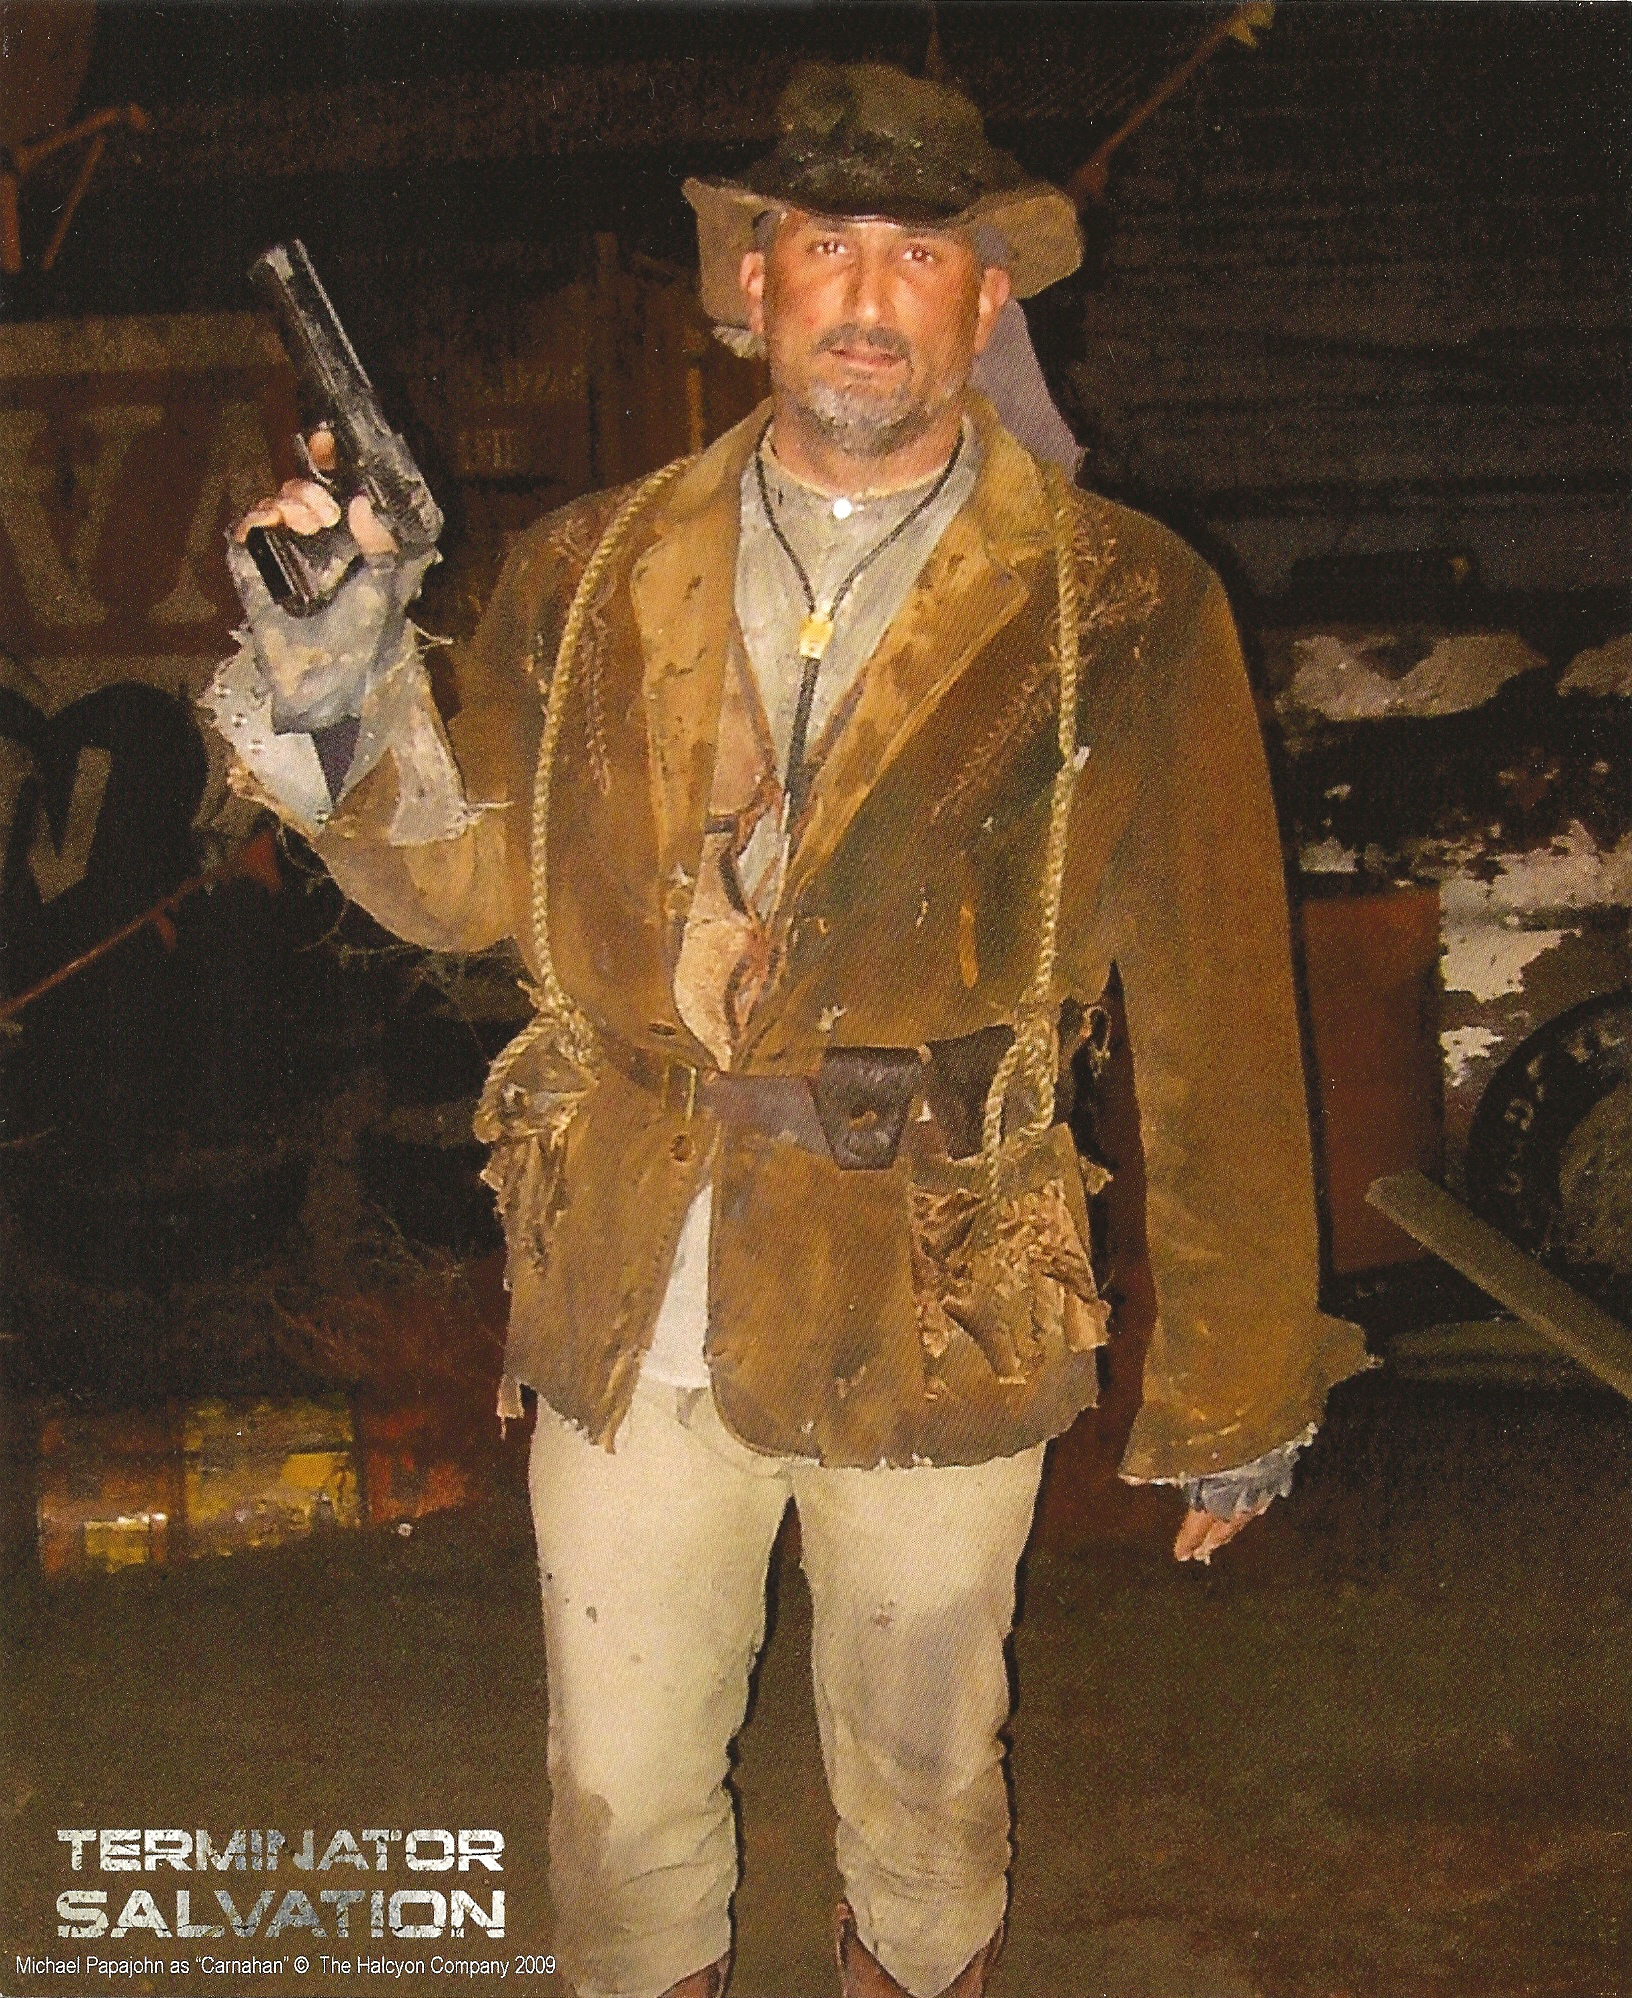 Michael Papajohn as Carnahan in Terminator Salvation